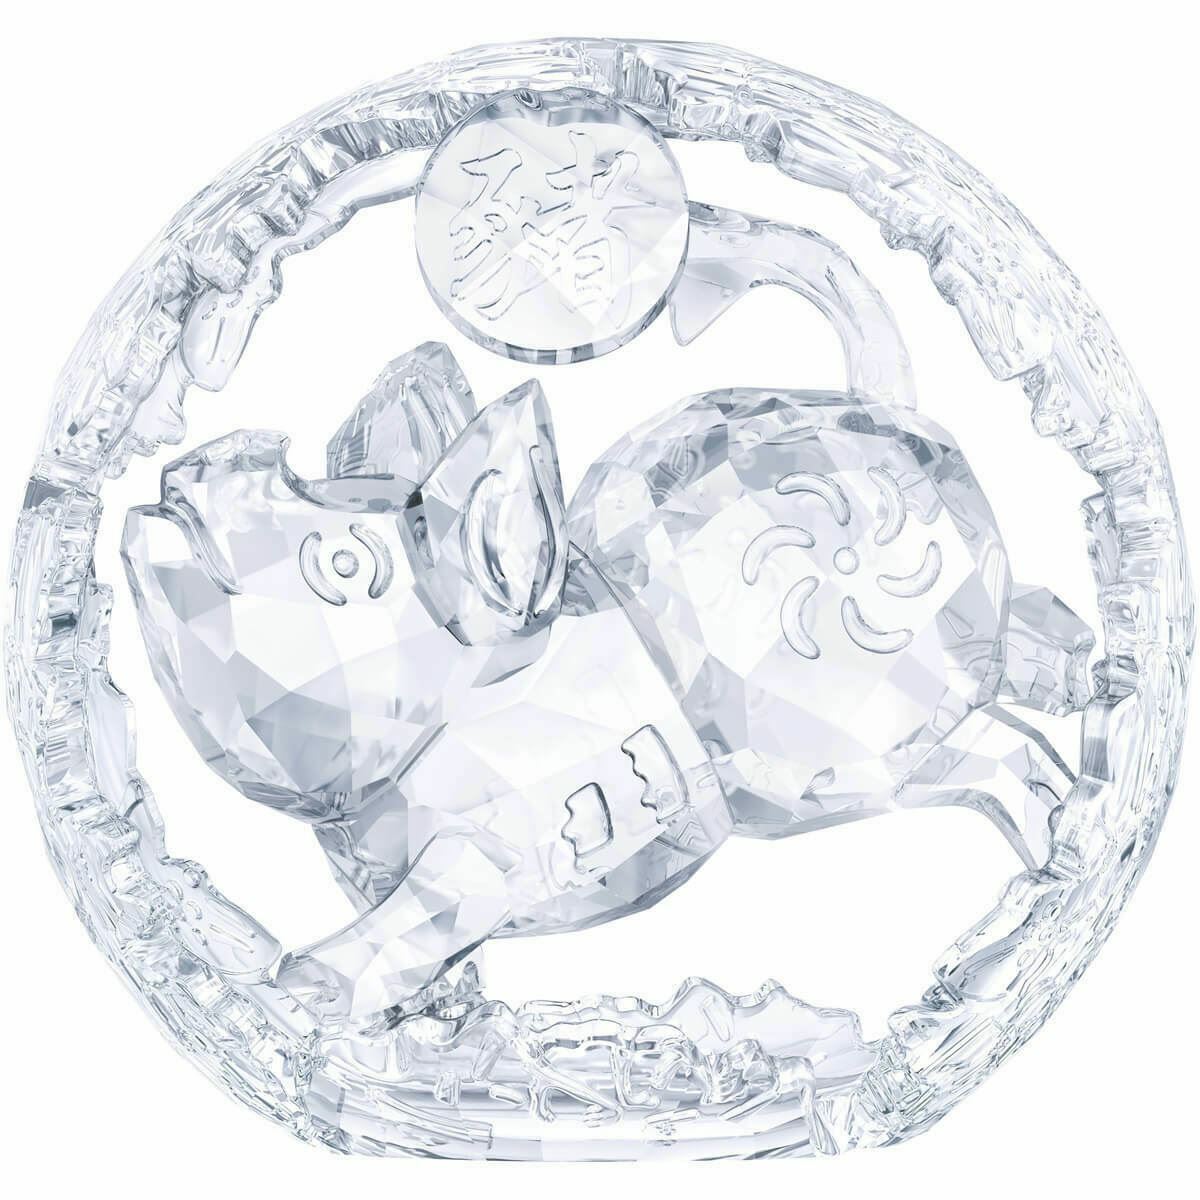 Swarovski Chinese Zodiac Pig Clear Crystal #5136814 New in Box $599